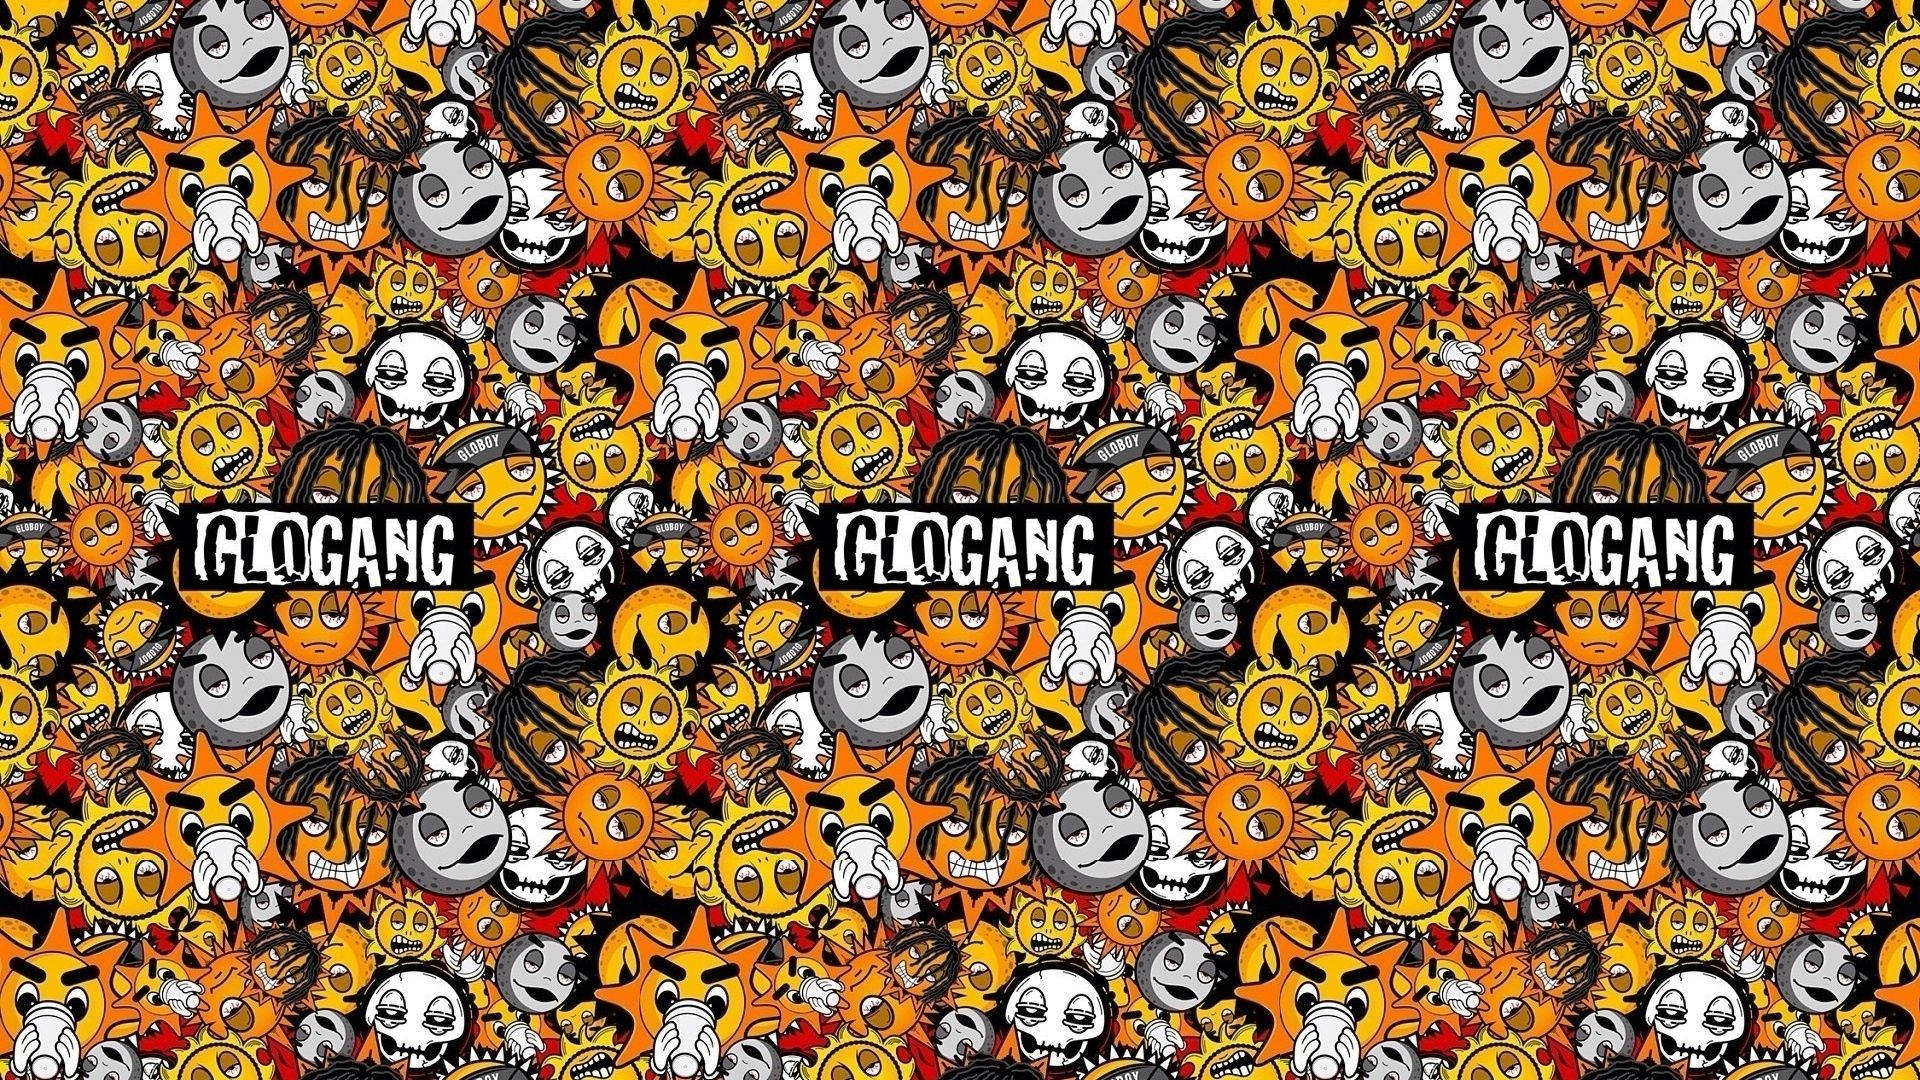 Chef Keef Glo Gang Emojis Wallpaper